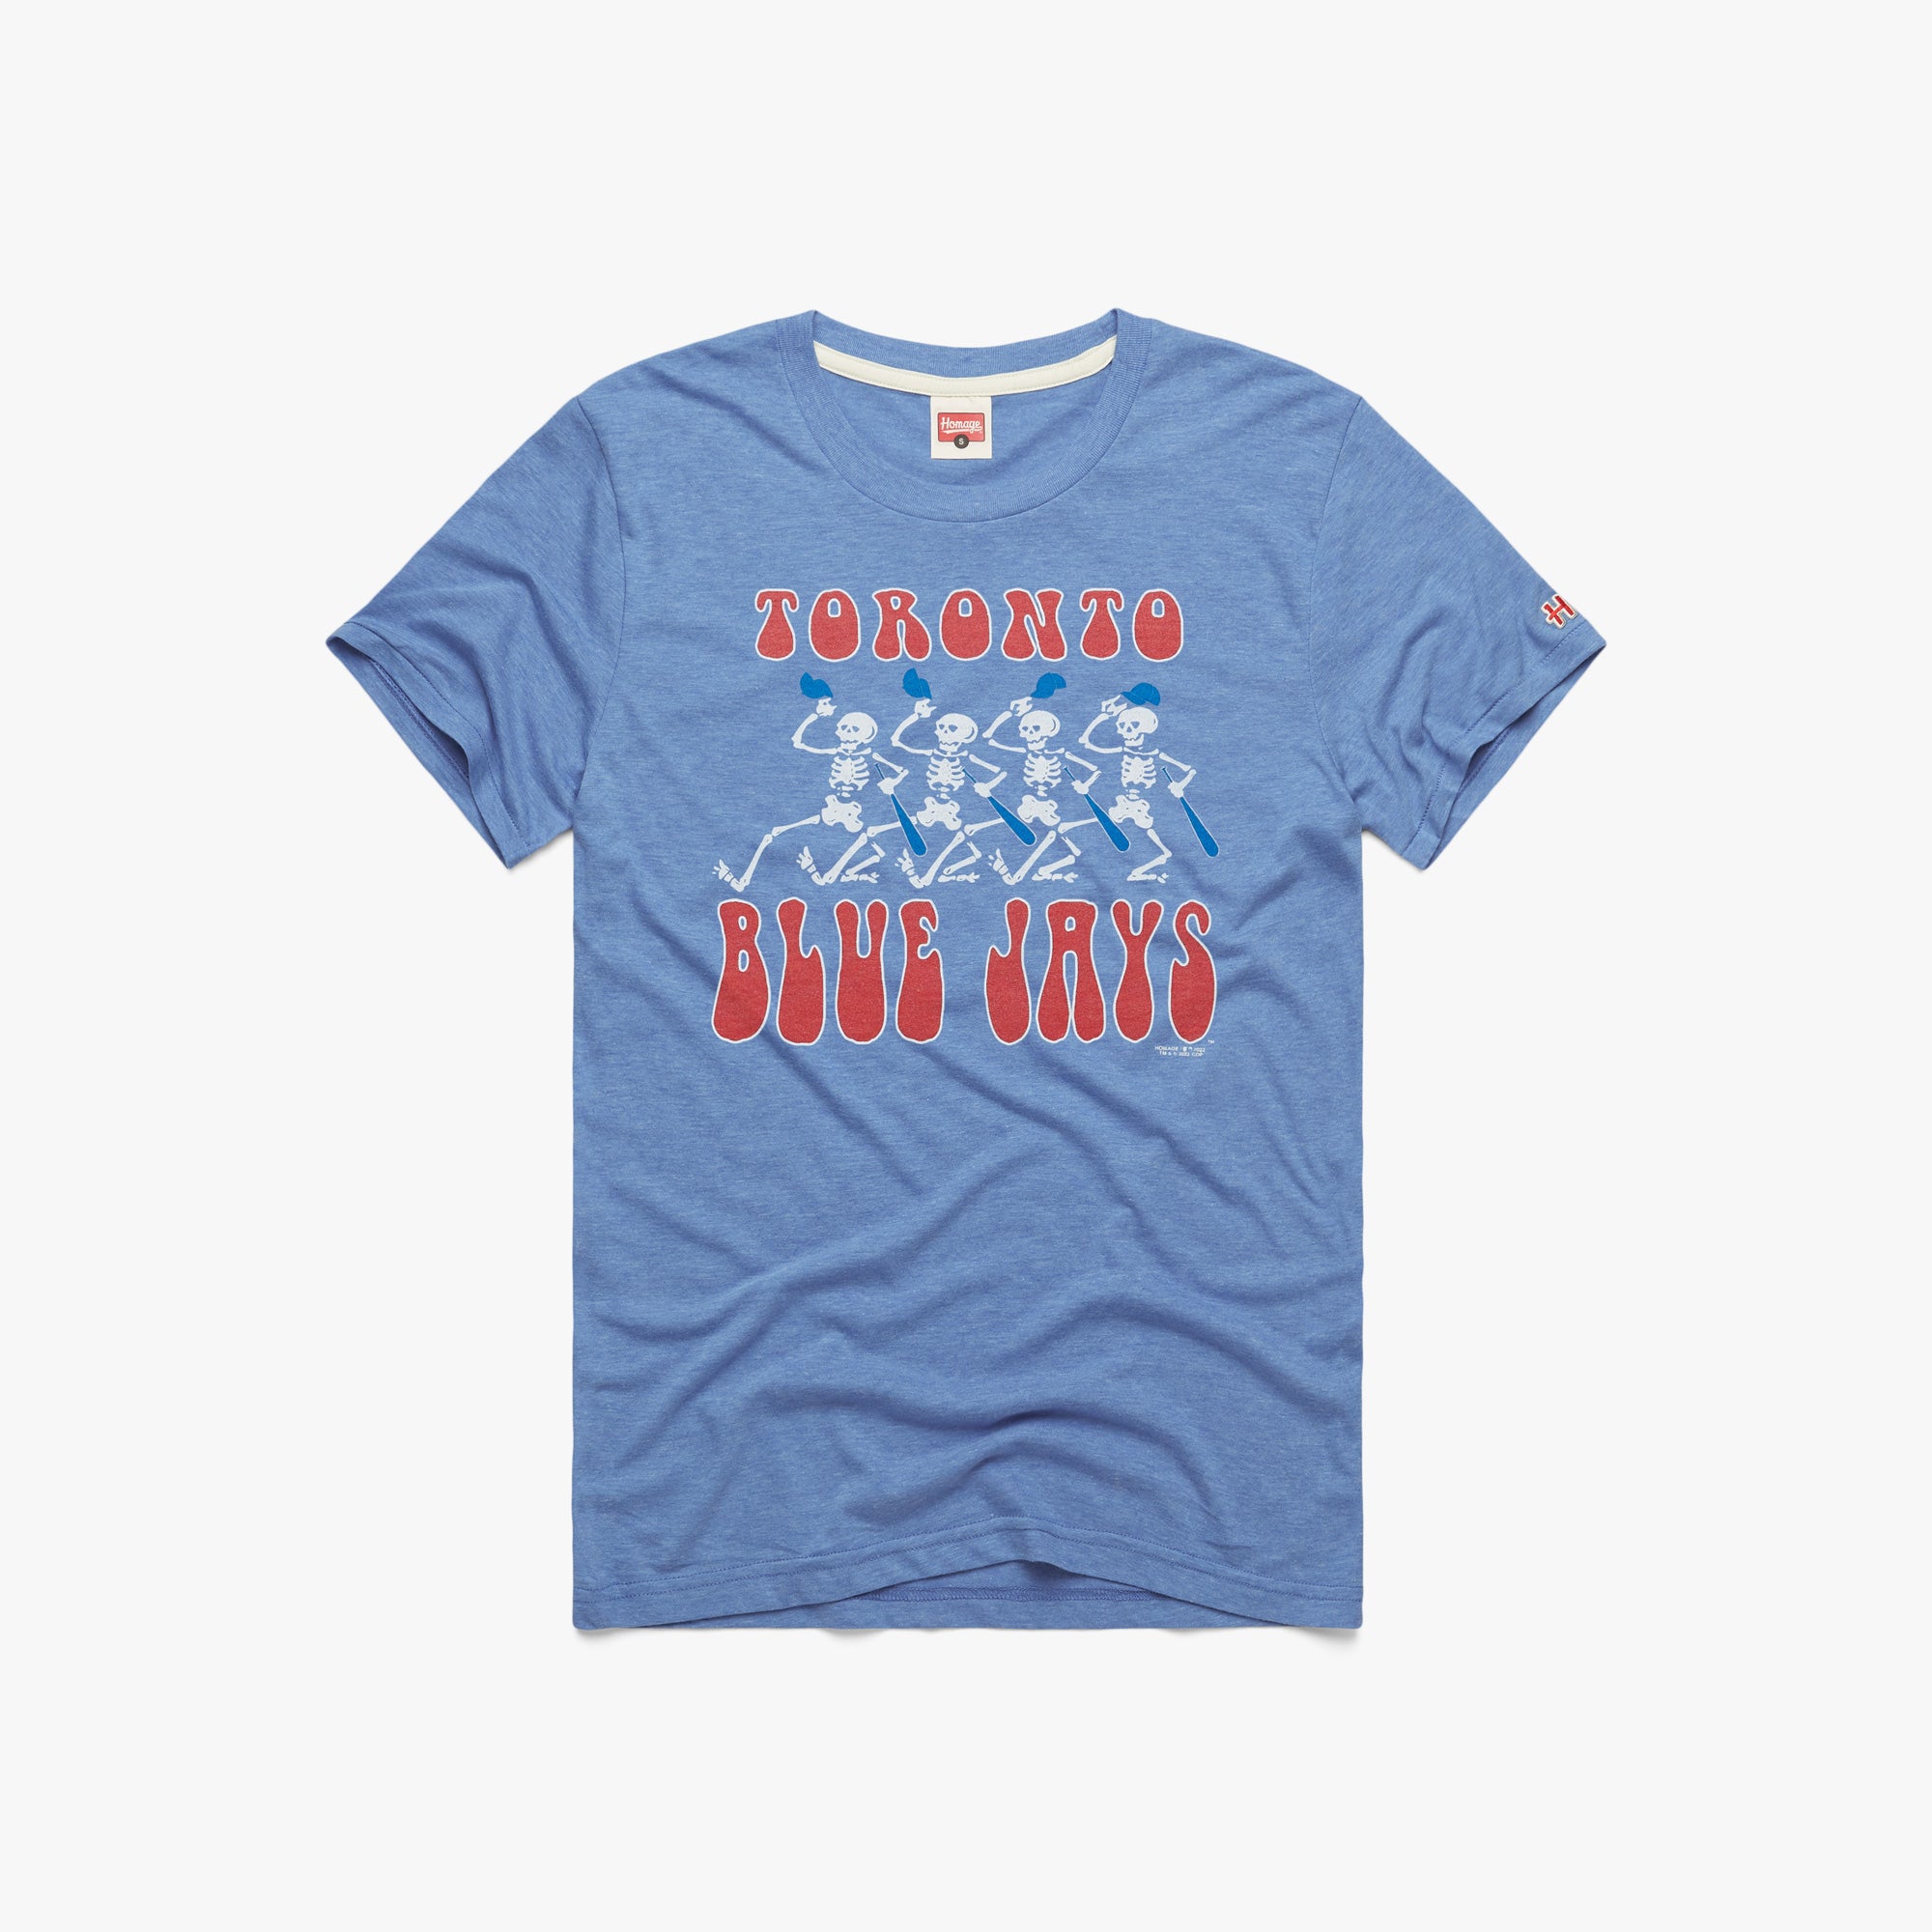 Powder Blue Uni's 4 Life T-Shirt + Hoodie, Toronto Blue Jays